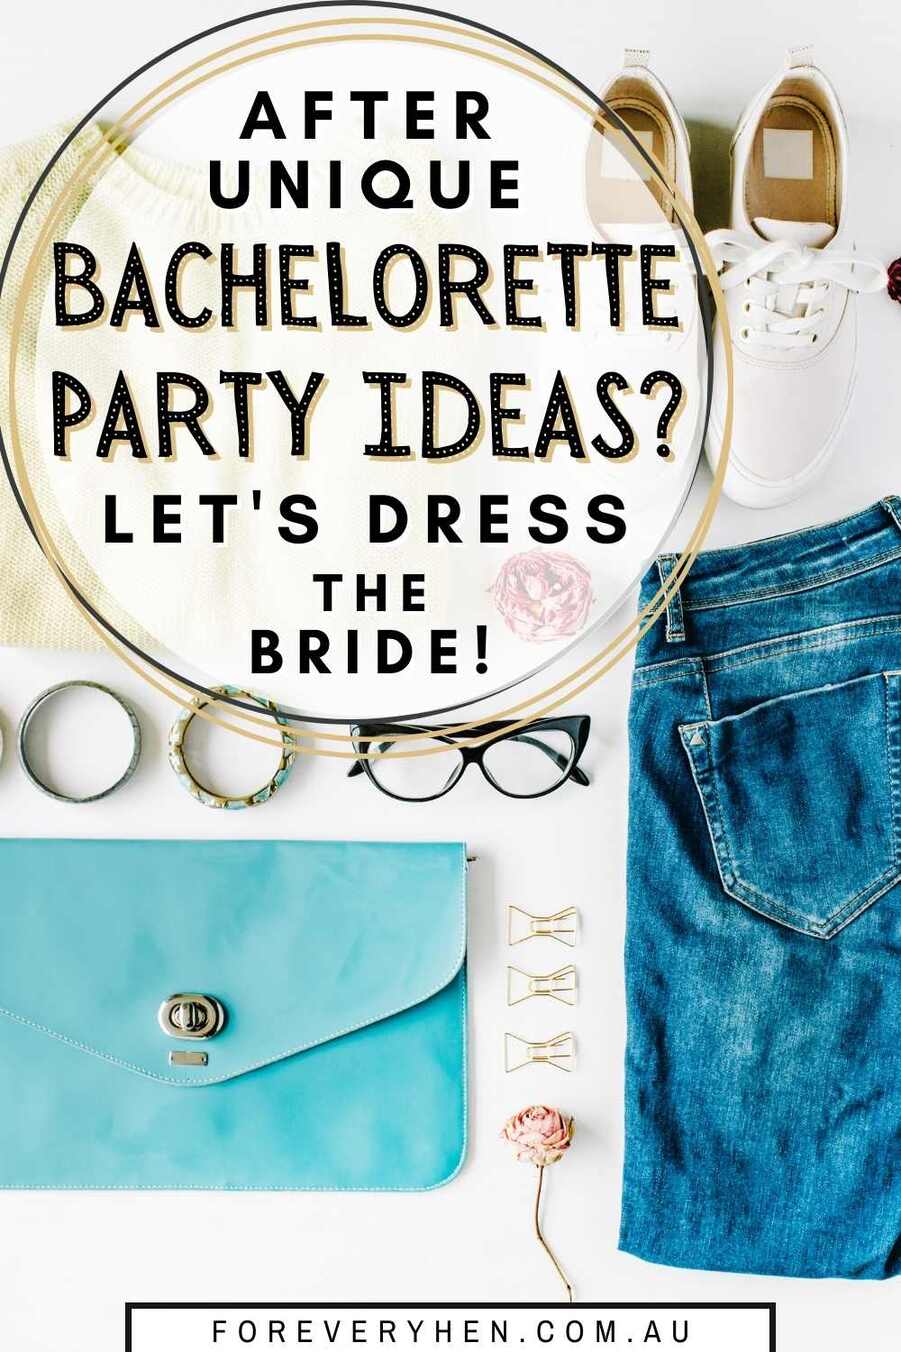 Bachelorette Outfits & Party Dresses